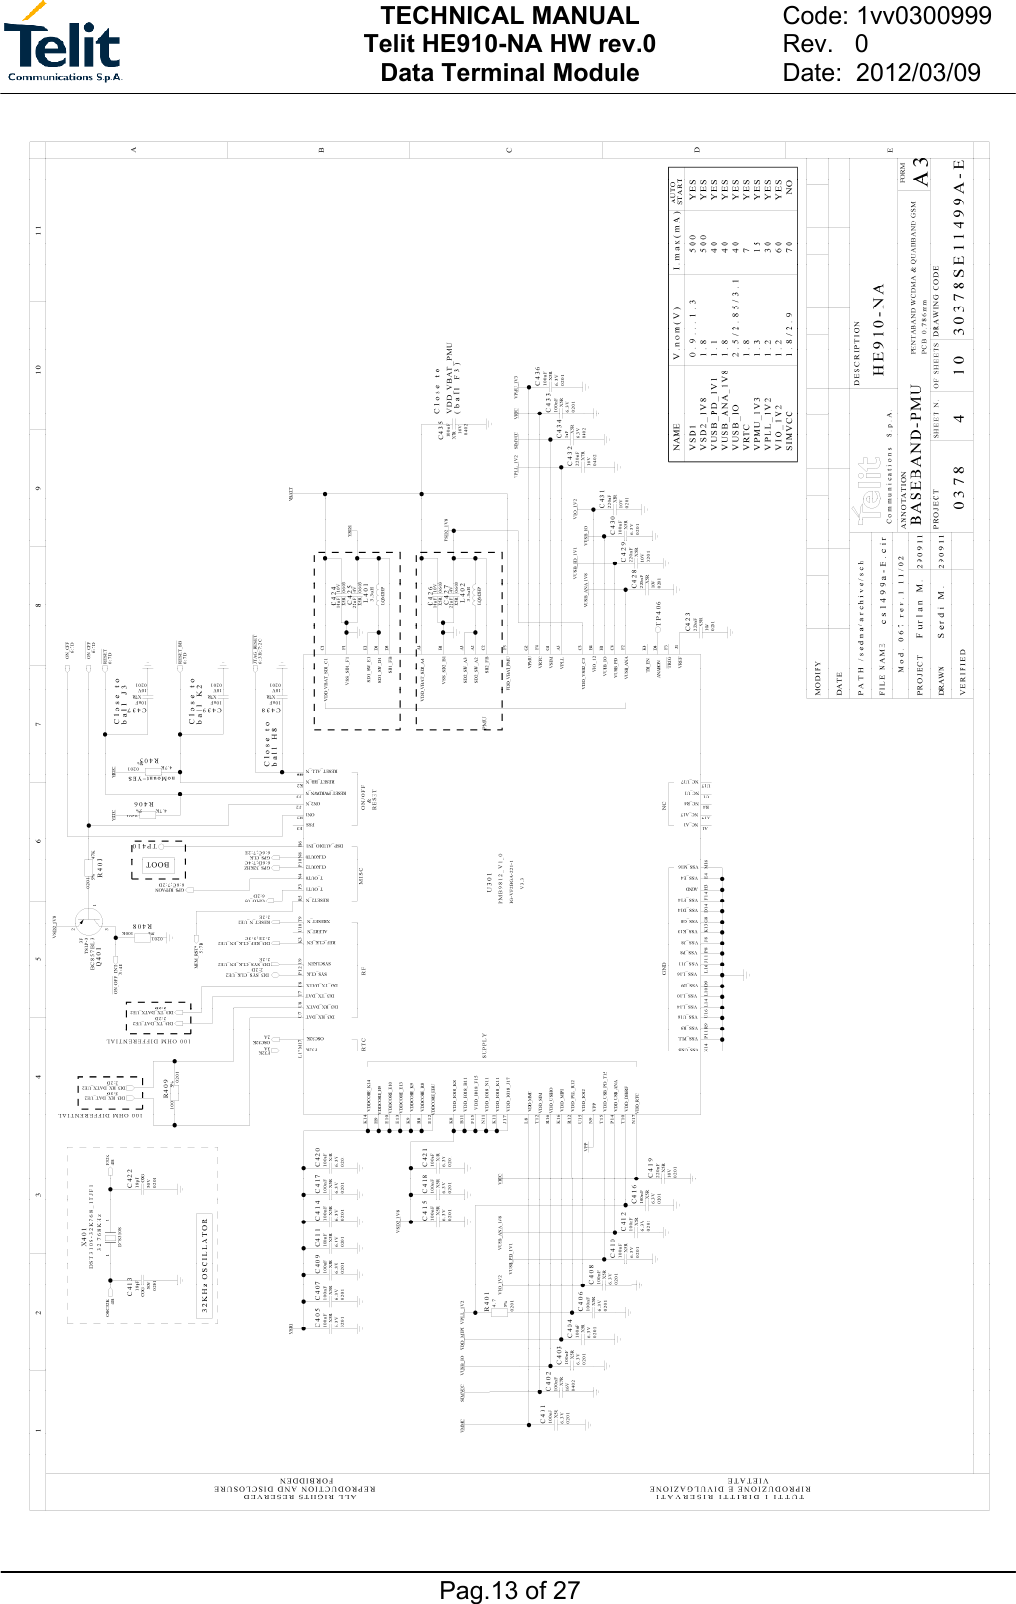 TECHNICAL MANUAL Telit HE910-NA HW rev.0 Data Terminal Module   Pag.13 of 27 Code: 1vv0300999    Rev.   0  Date:  2012/03/09  